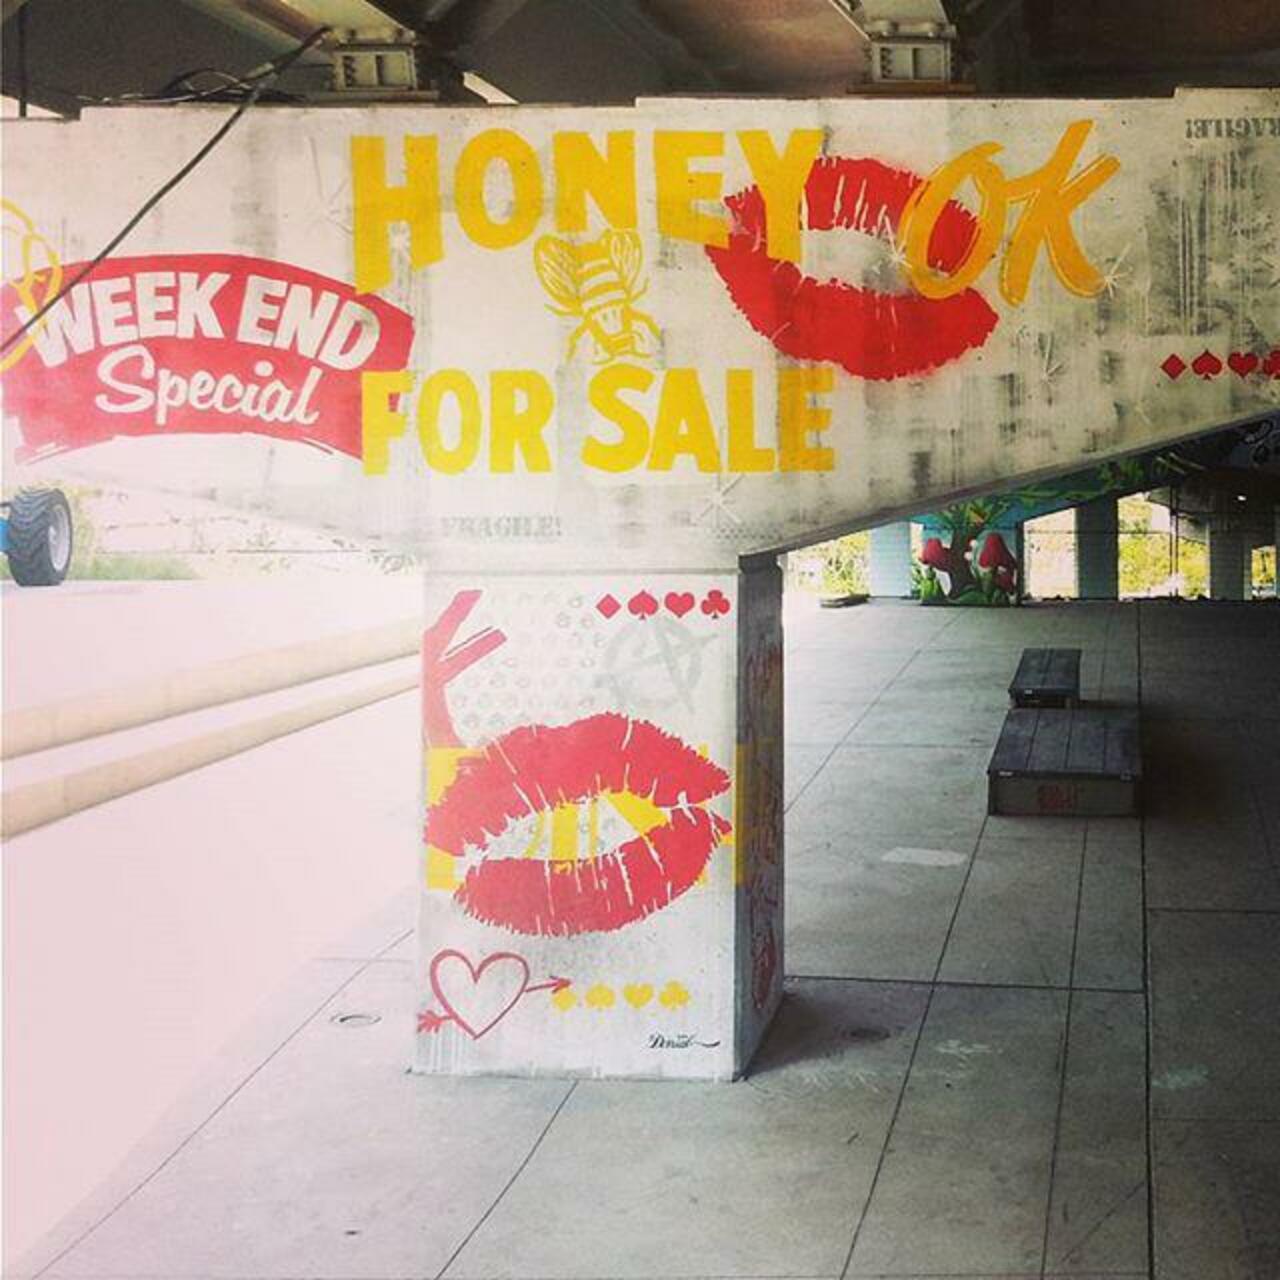 RT @StArtEverywhere: Honey for Sale!  #the6ix #thesix #tdot #Toronto #corktown #graffiti #graff #mural #art #arte #artwork #underpass… http://t.co/RgWvhIU2gy